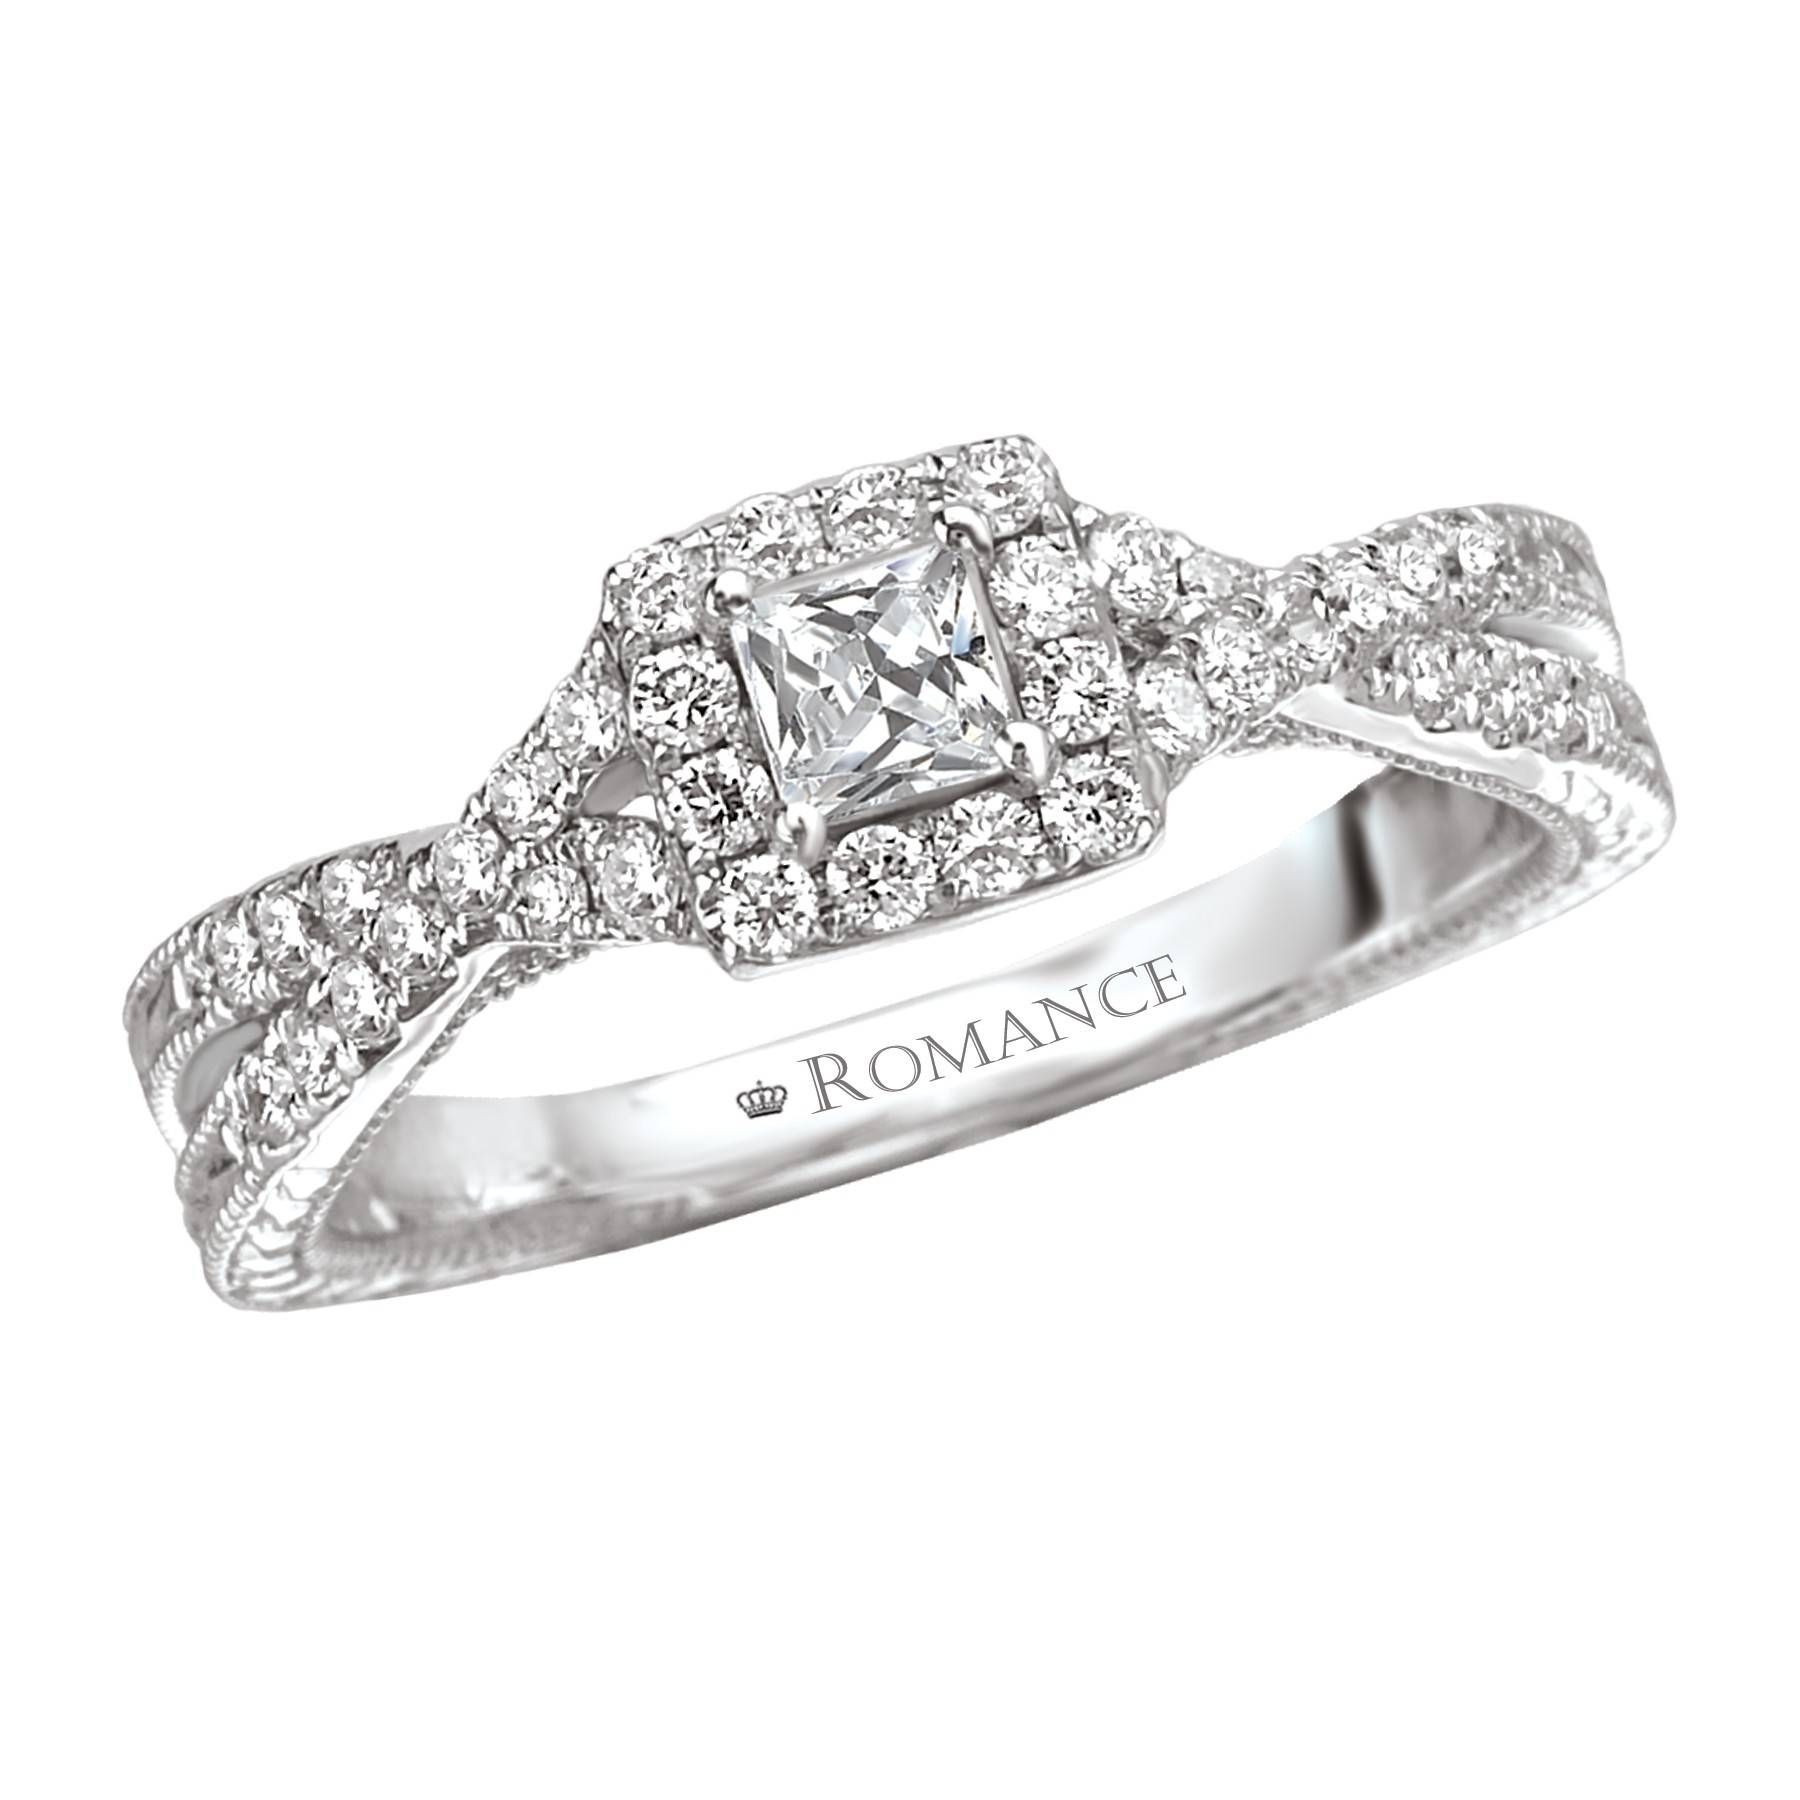 Wedding Rings : Princess Cut Diamond Engagement Ring And Wedding In Princess Cut Diamond Wedding Rings For Women (View 14 of 15)